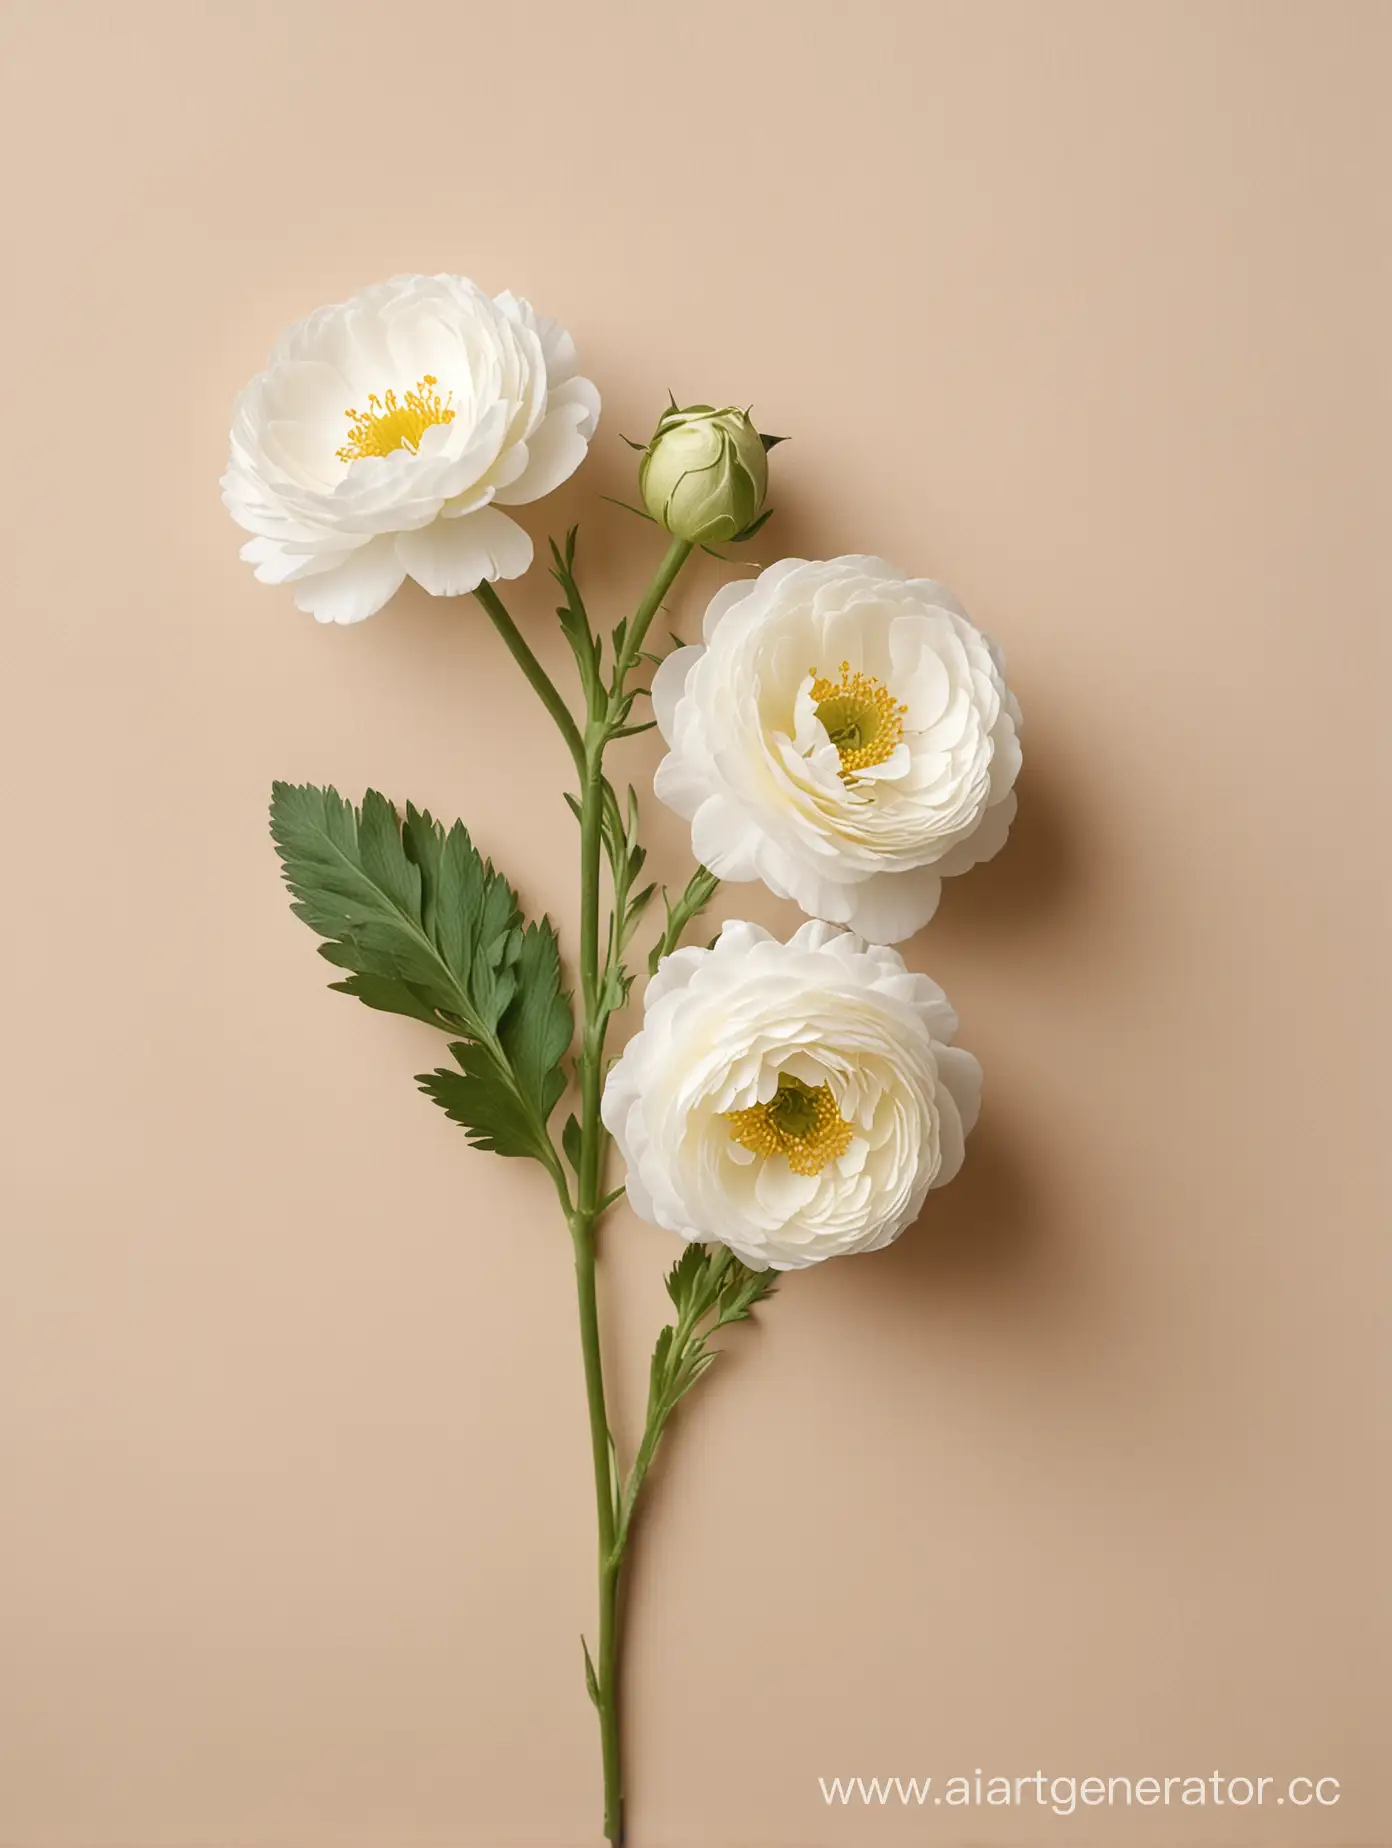 Elegant-White-Ranunculus-Flowers-on-Soft-Beige-Background-Minimalist-Floral-Art